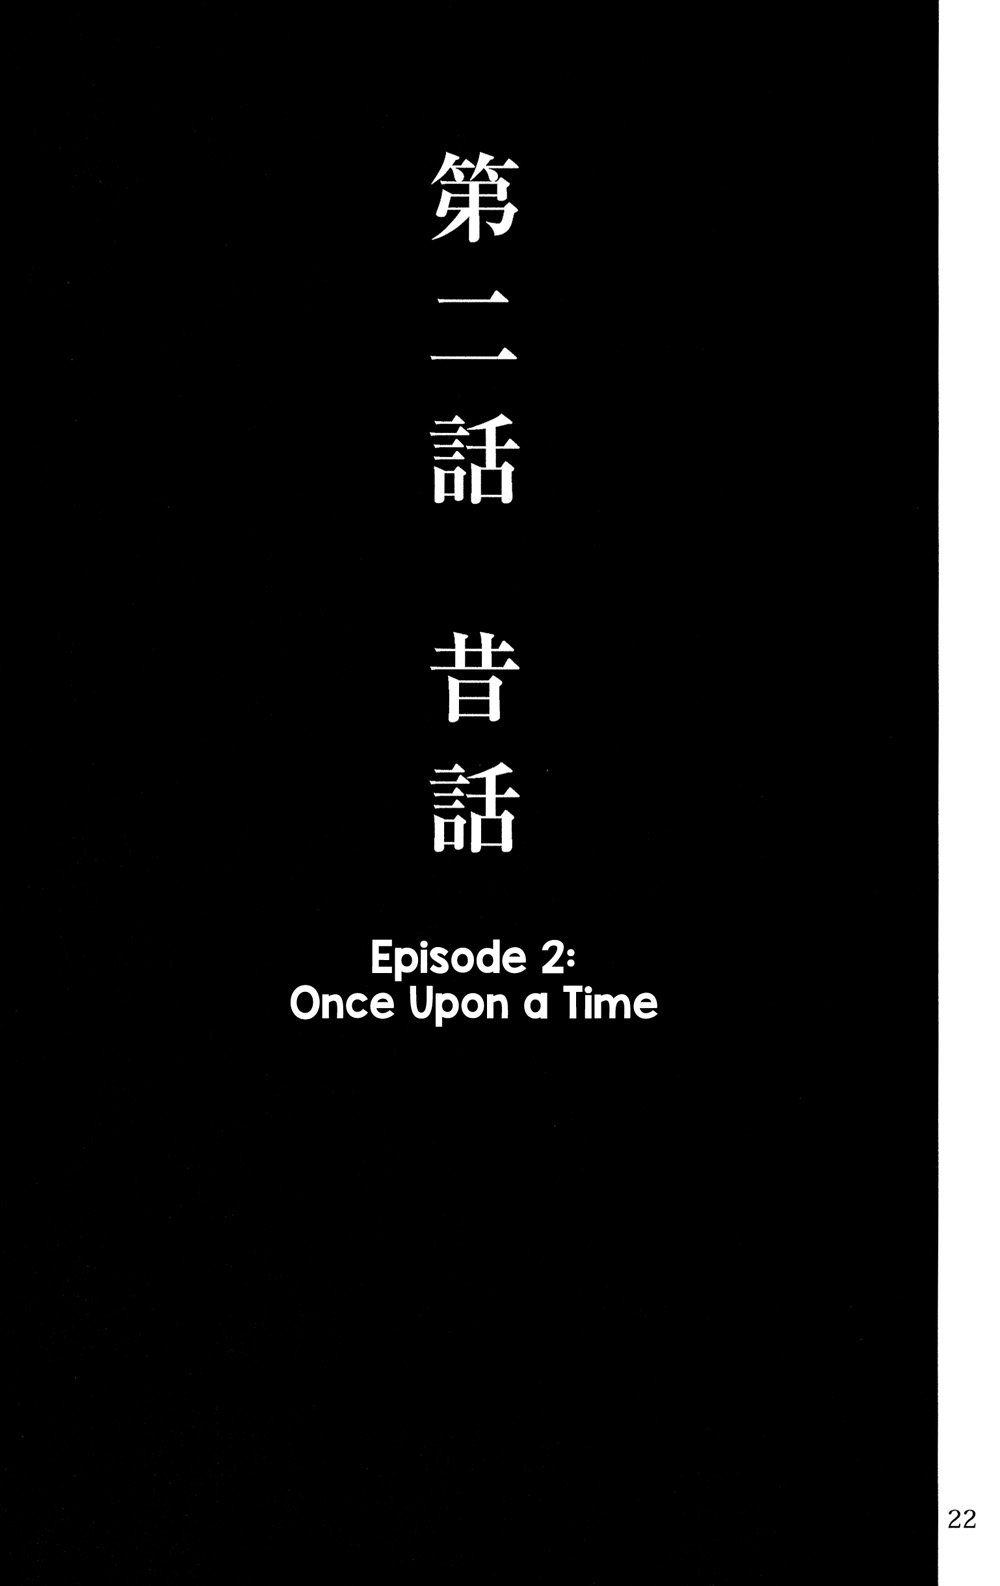 Sen Tokoyo no Ri (Doujinshi) Vol. 1 Ch. 2 Episode 2